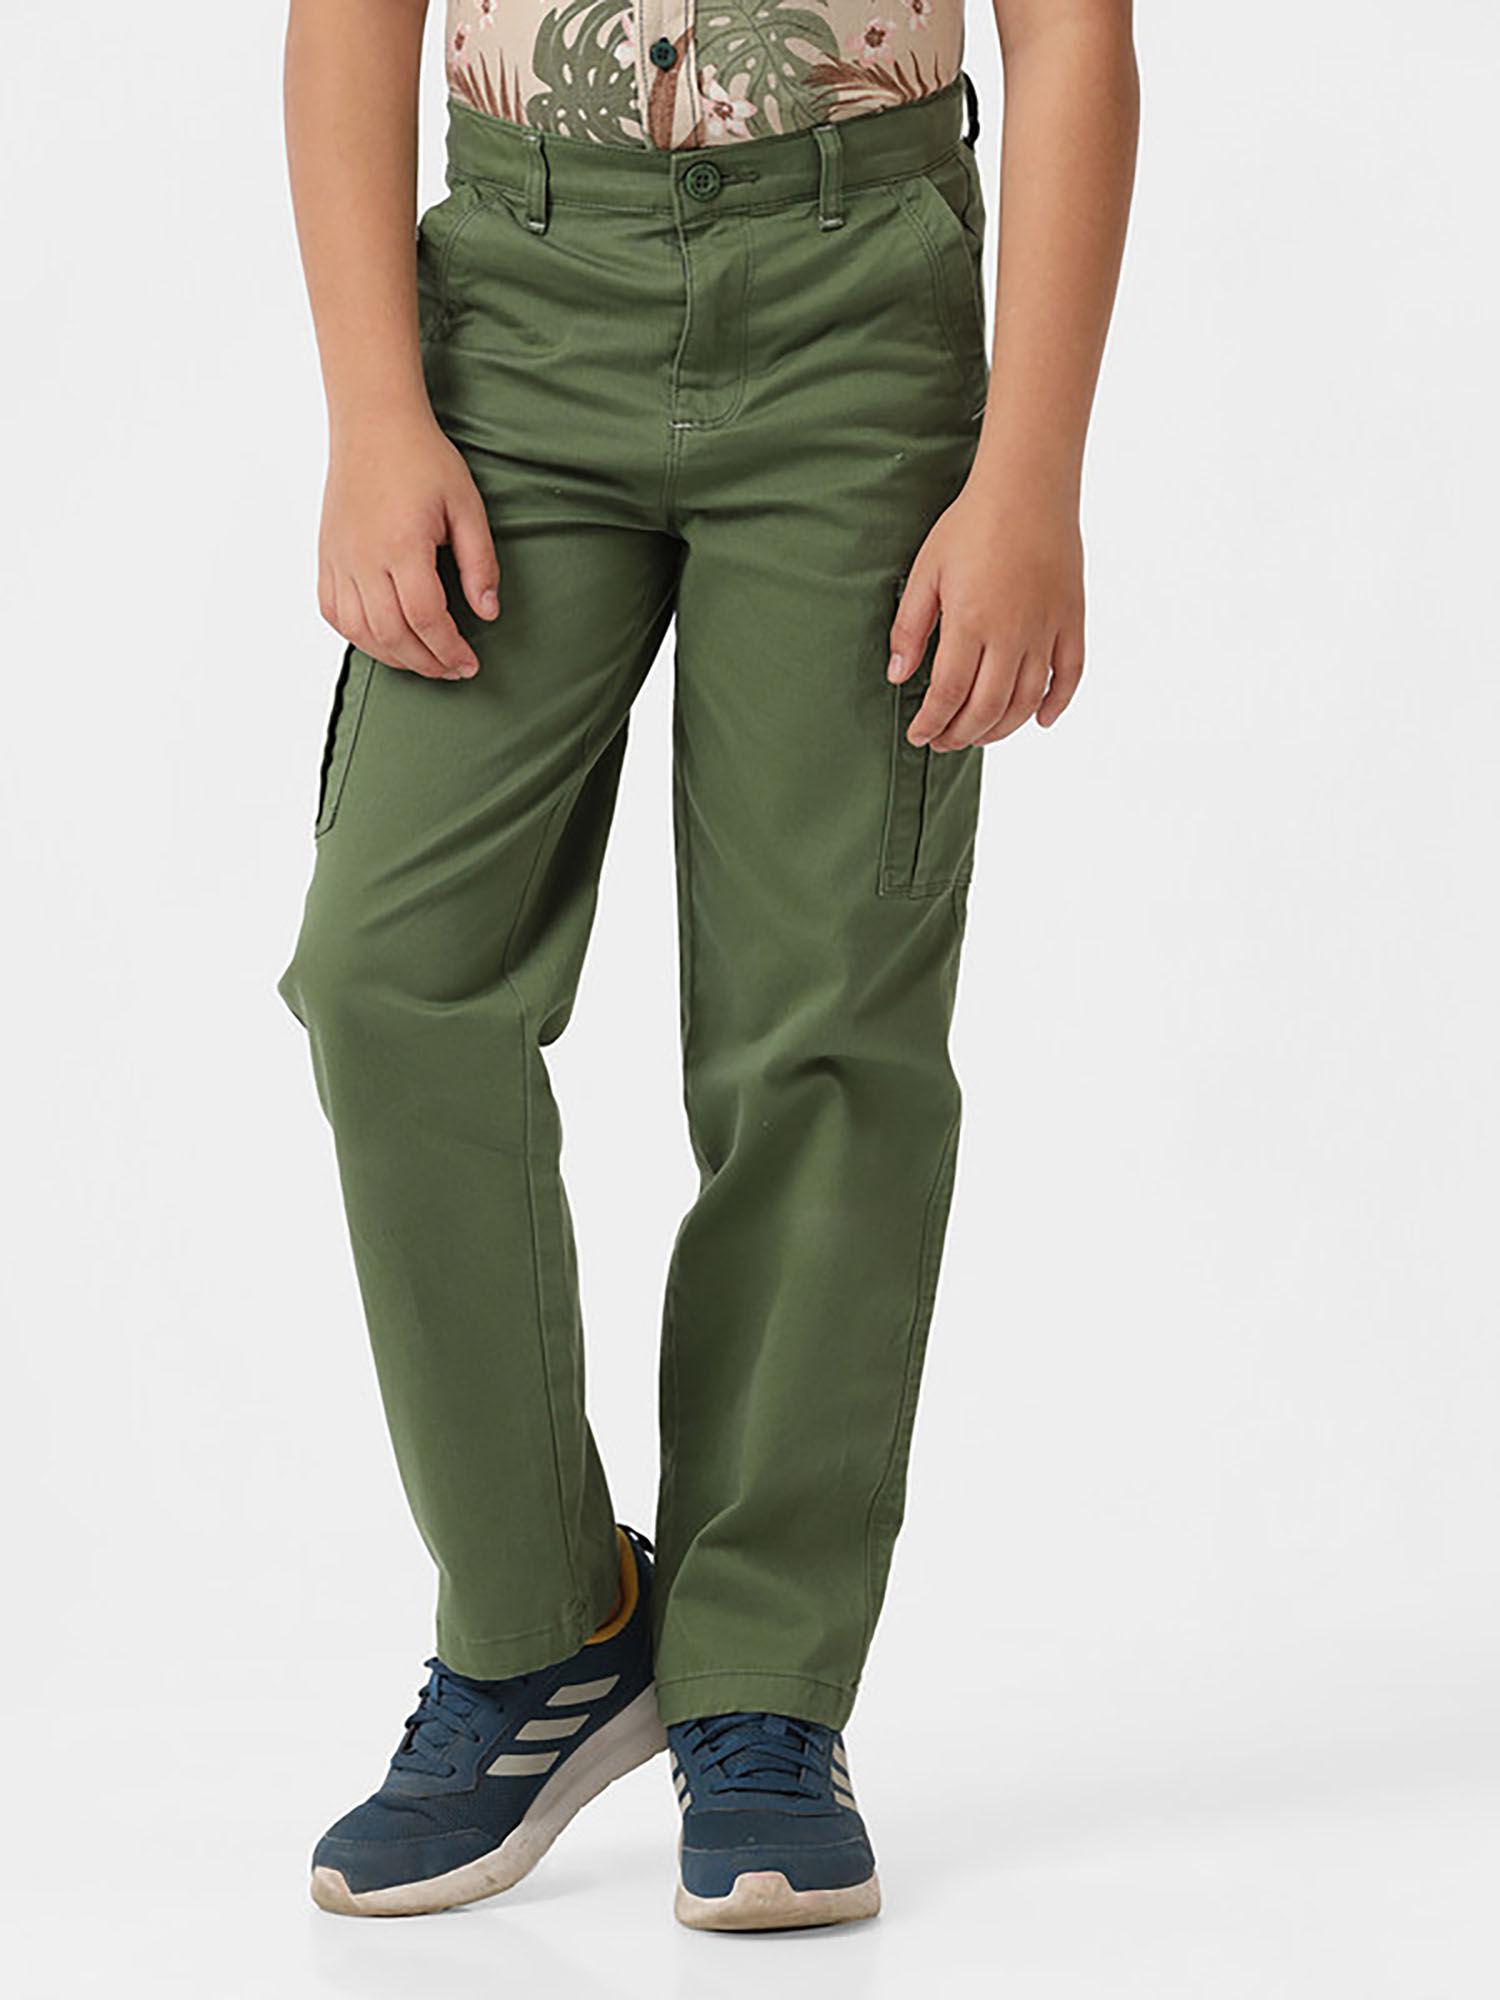 green solid/plain boys trouser